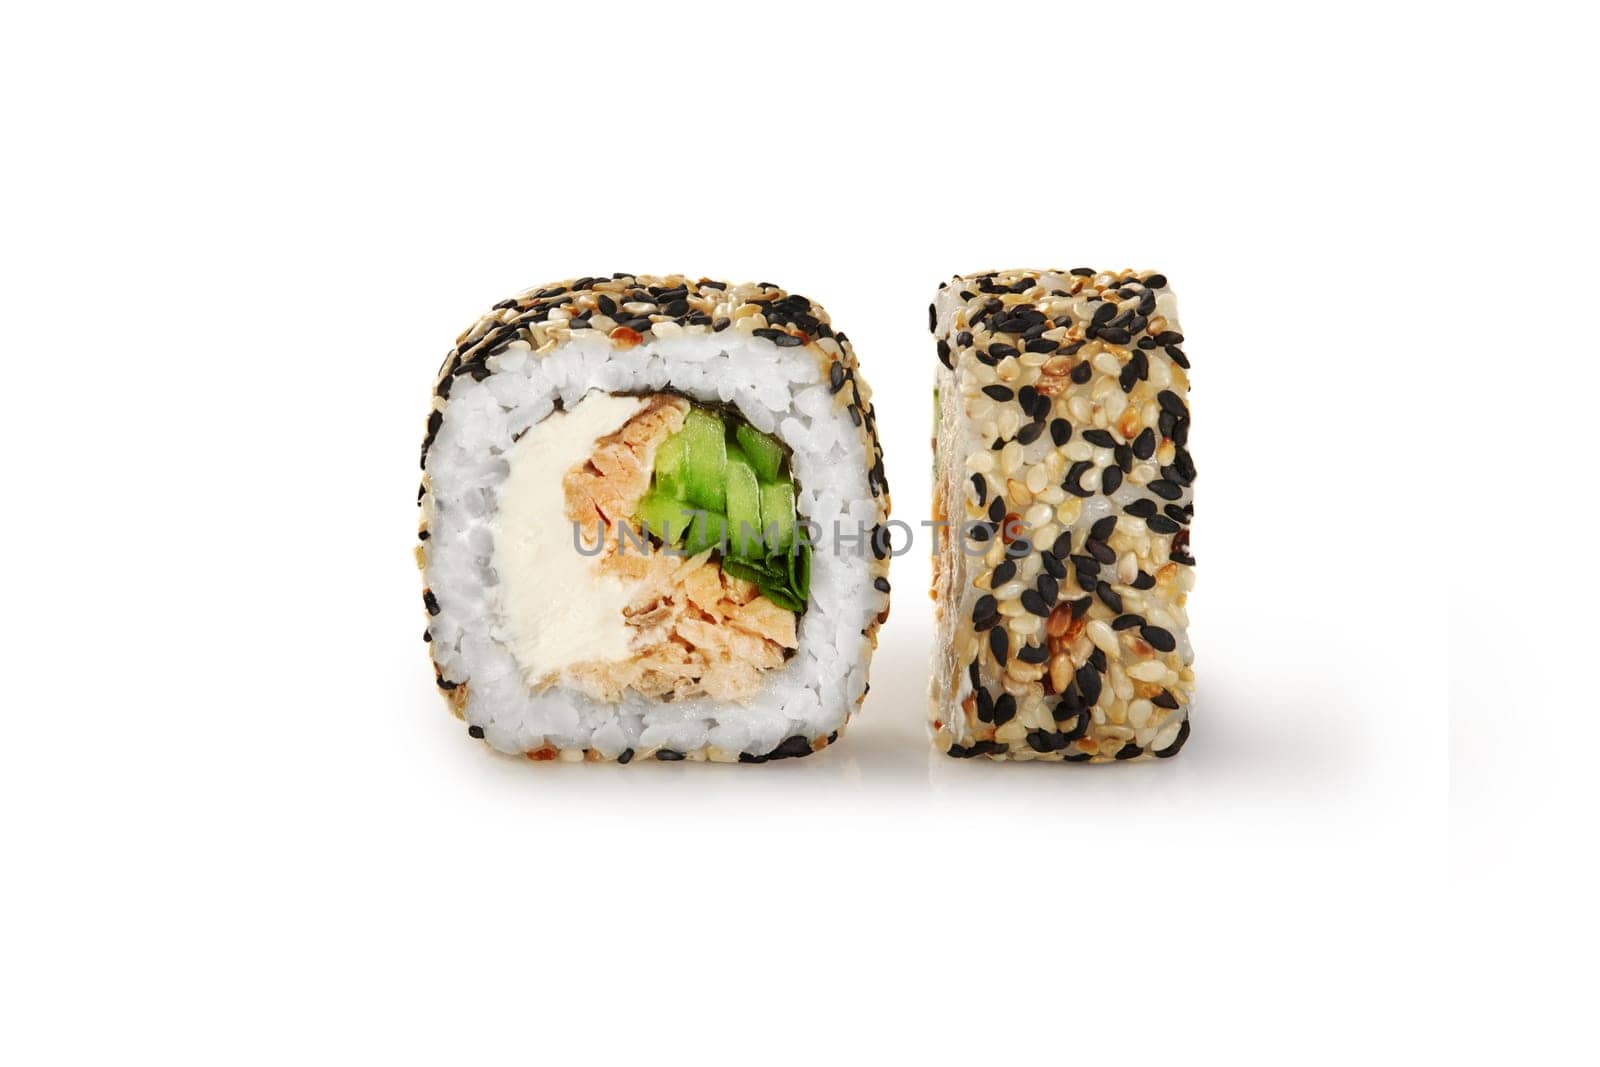 Baked tuna sushi roll with sesame on white background by nazarovsergey